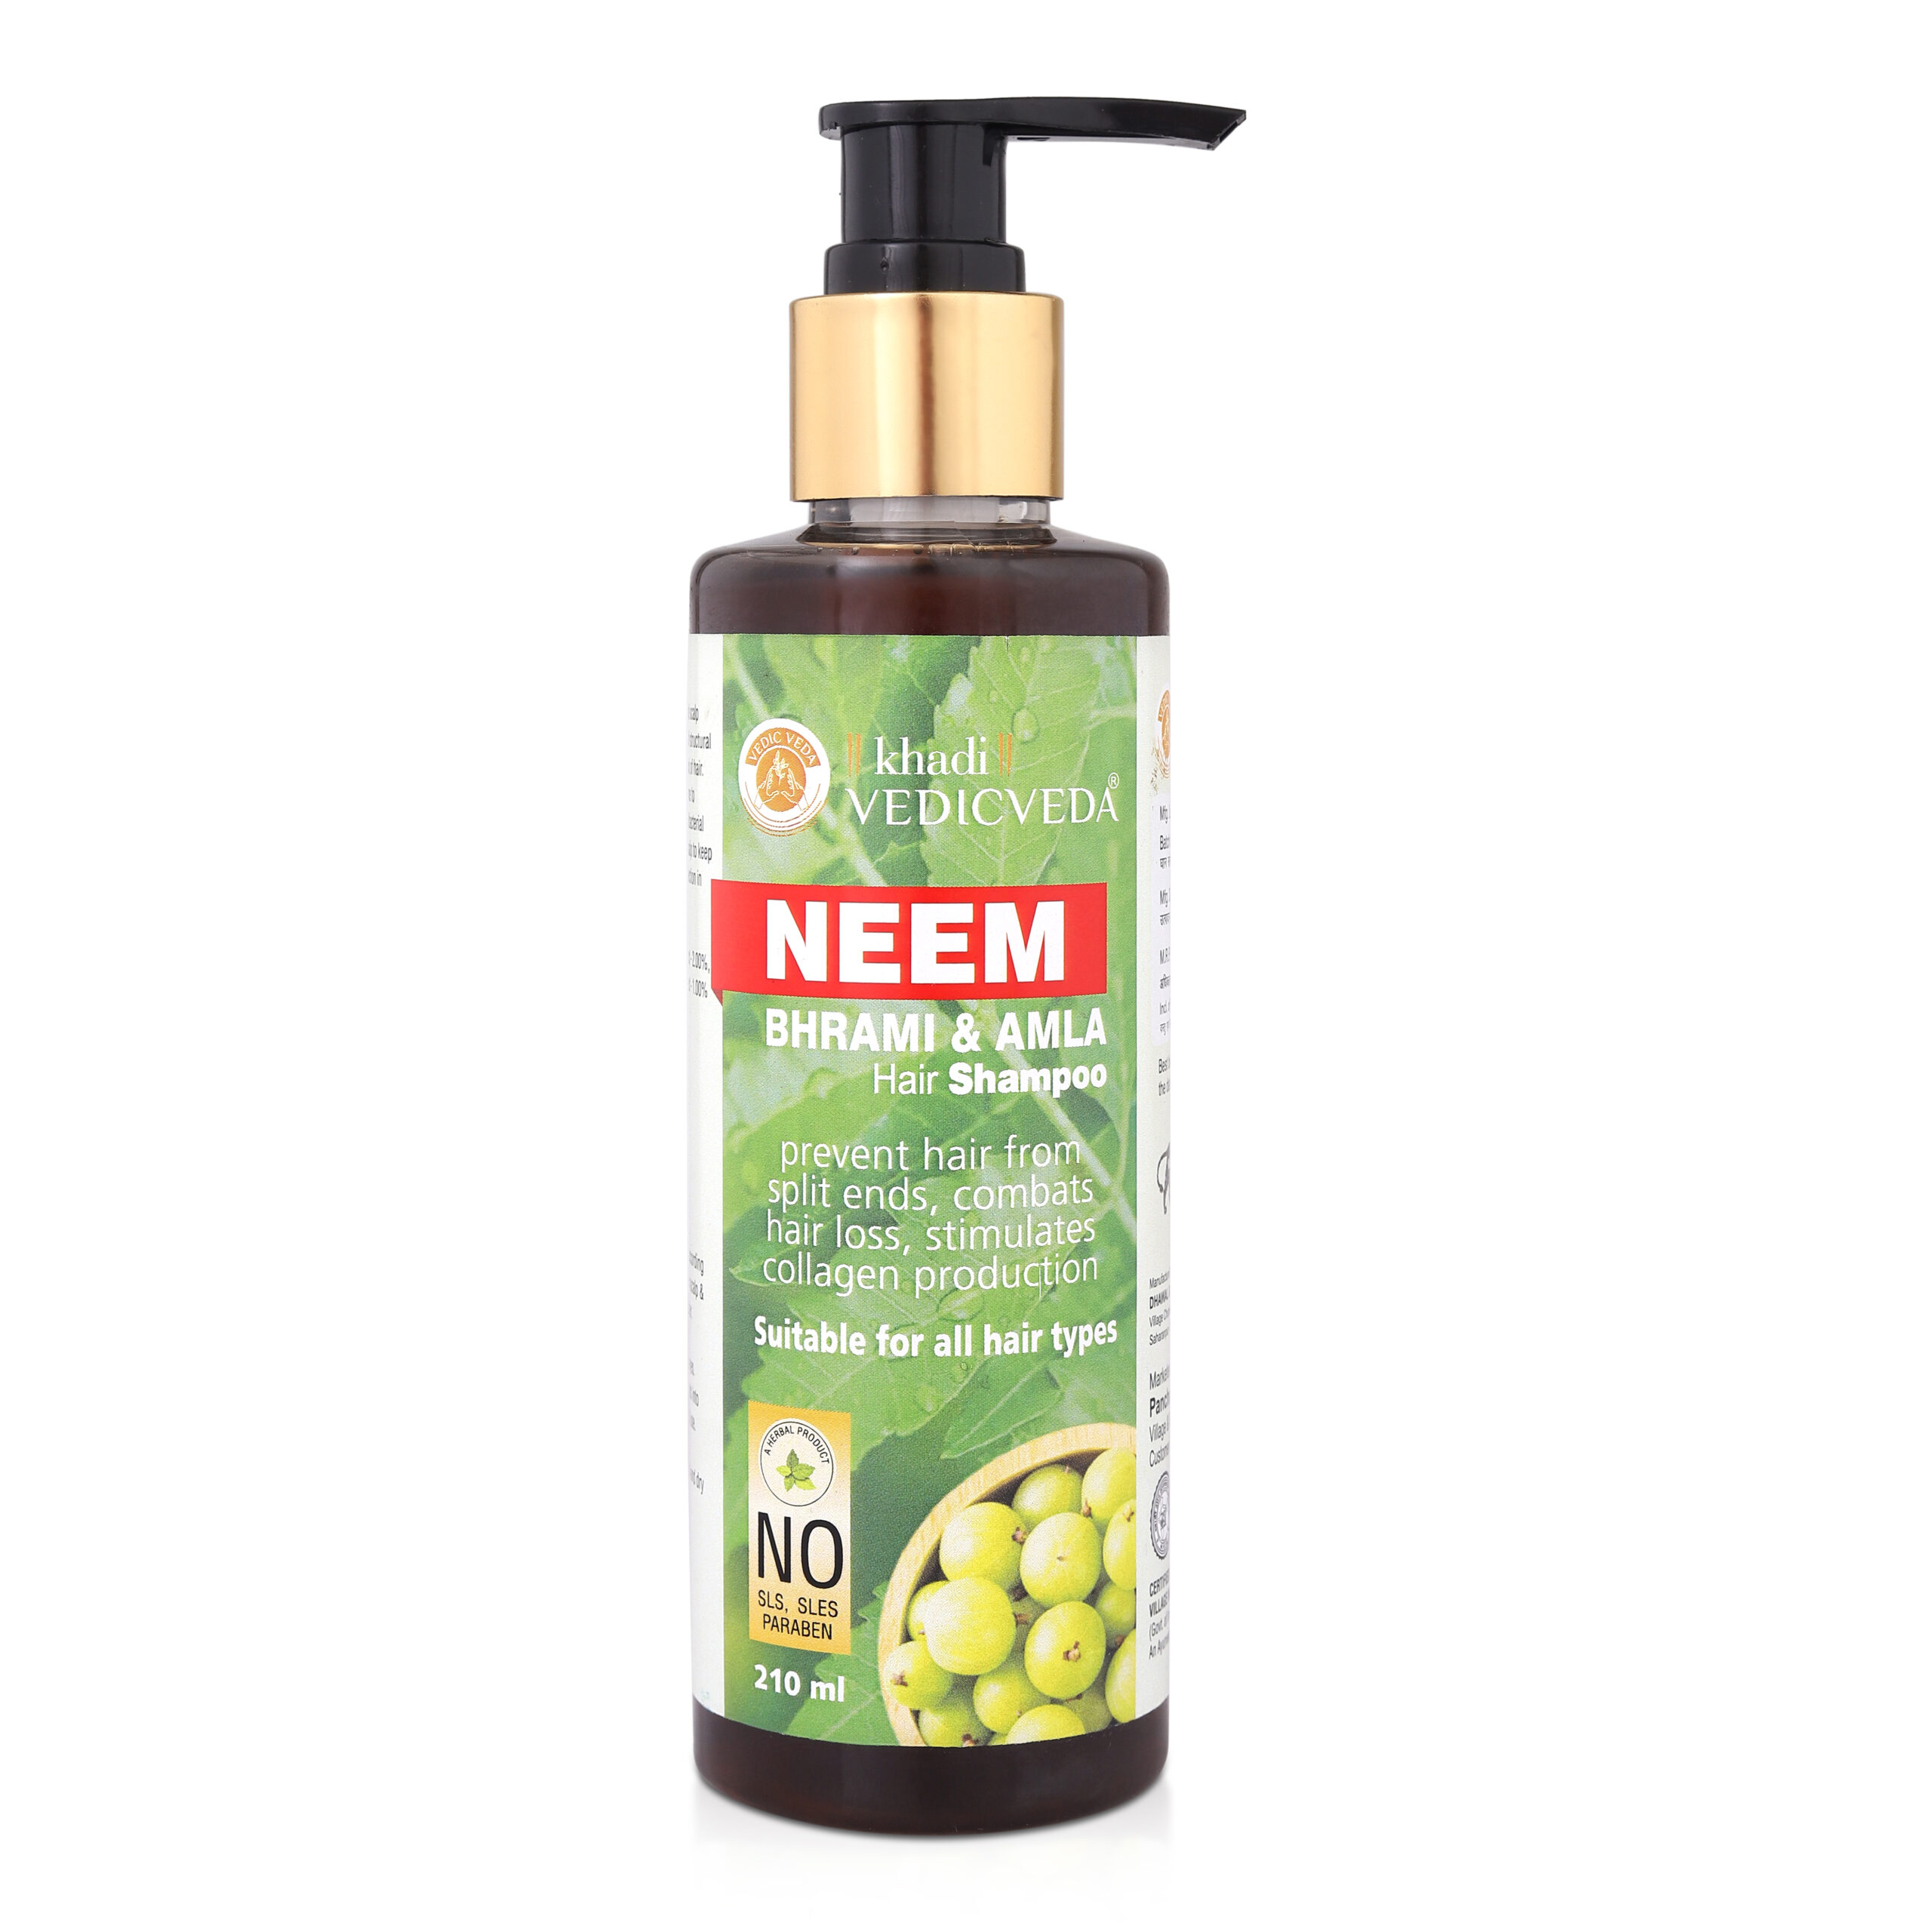 Neem Bhrami & Amla Hair Shampoo